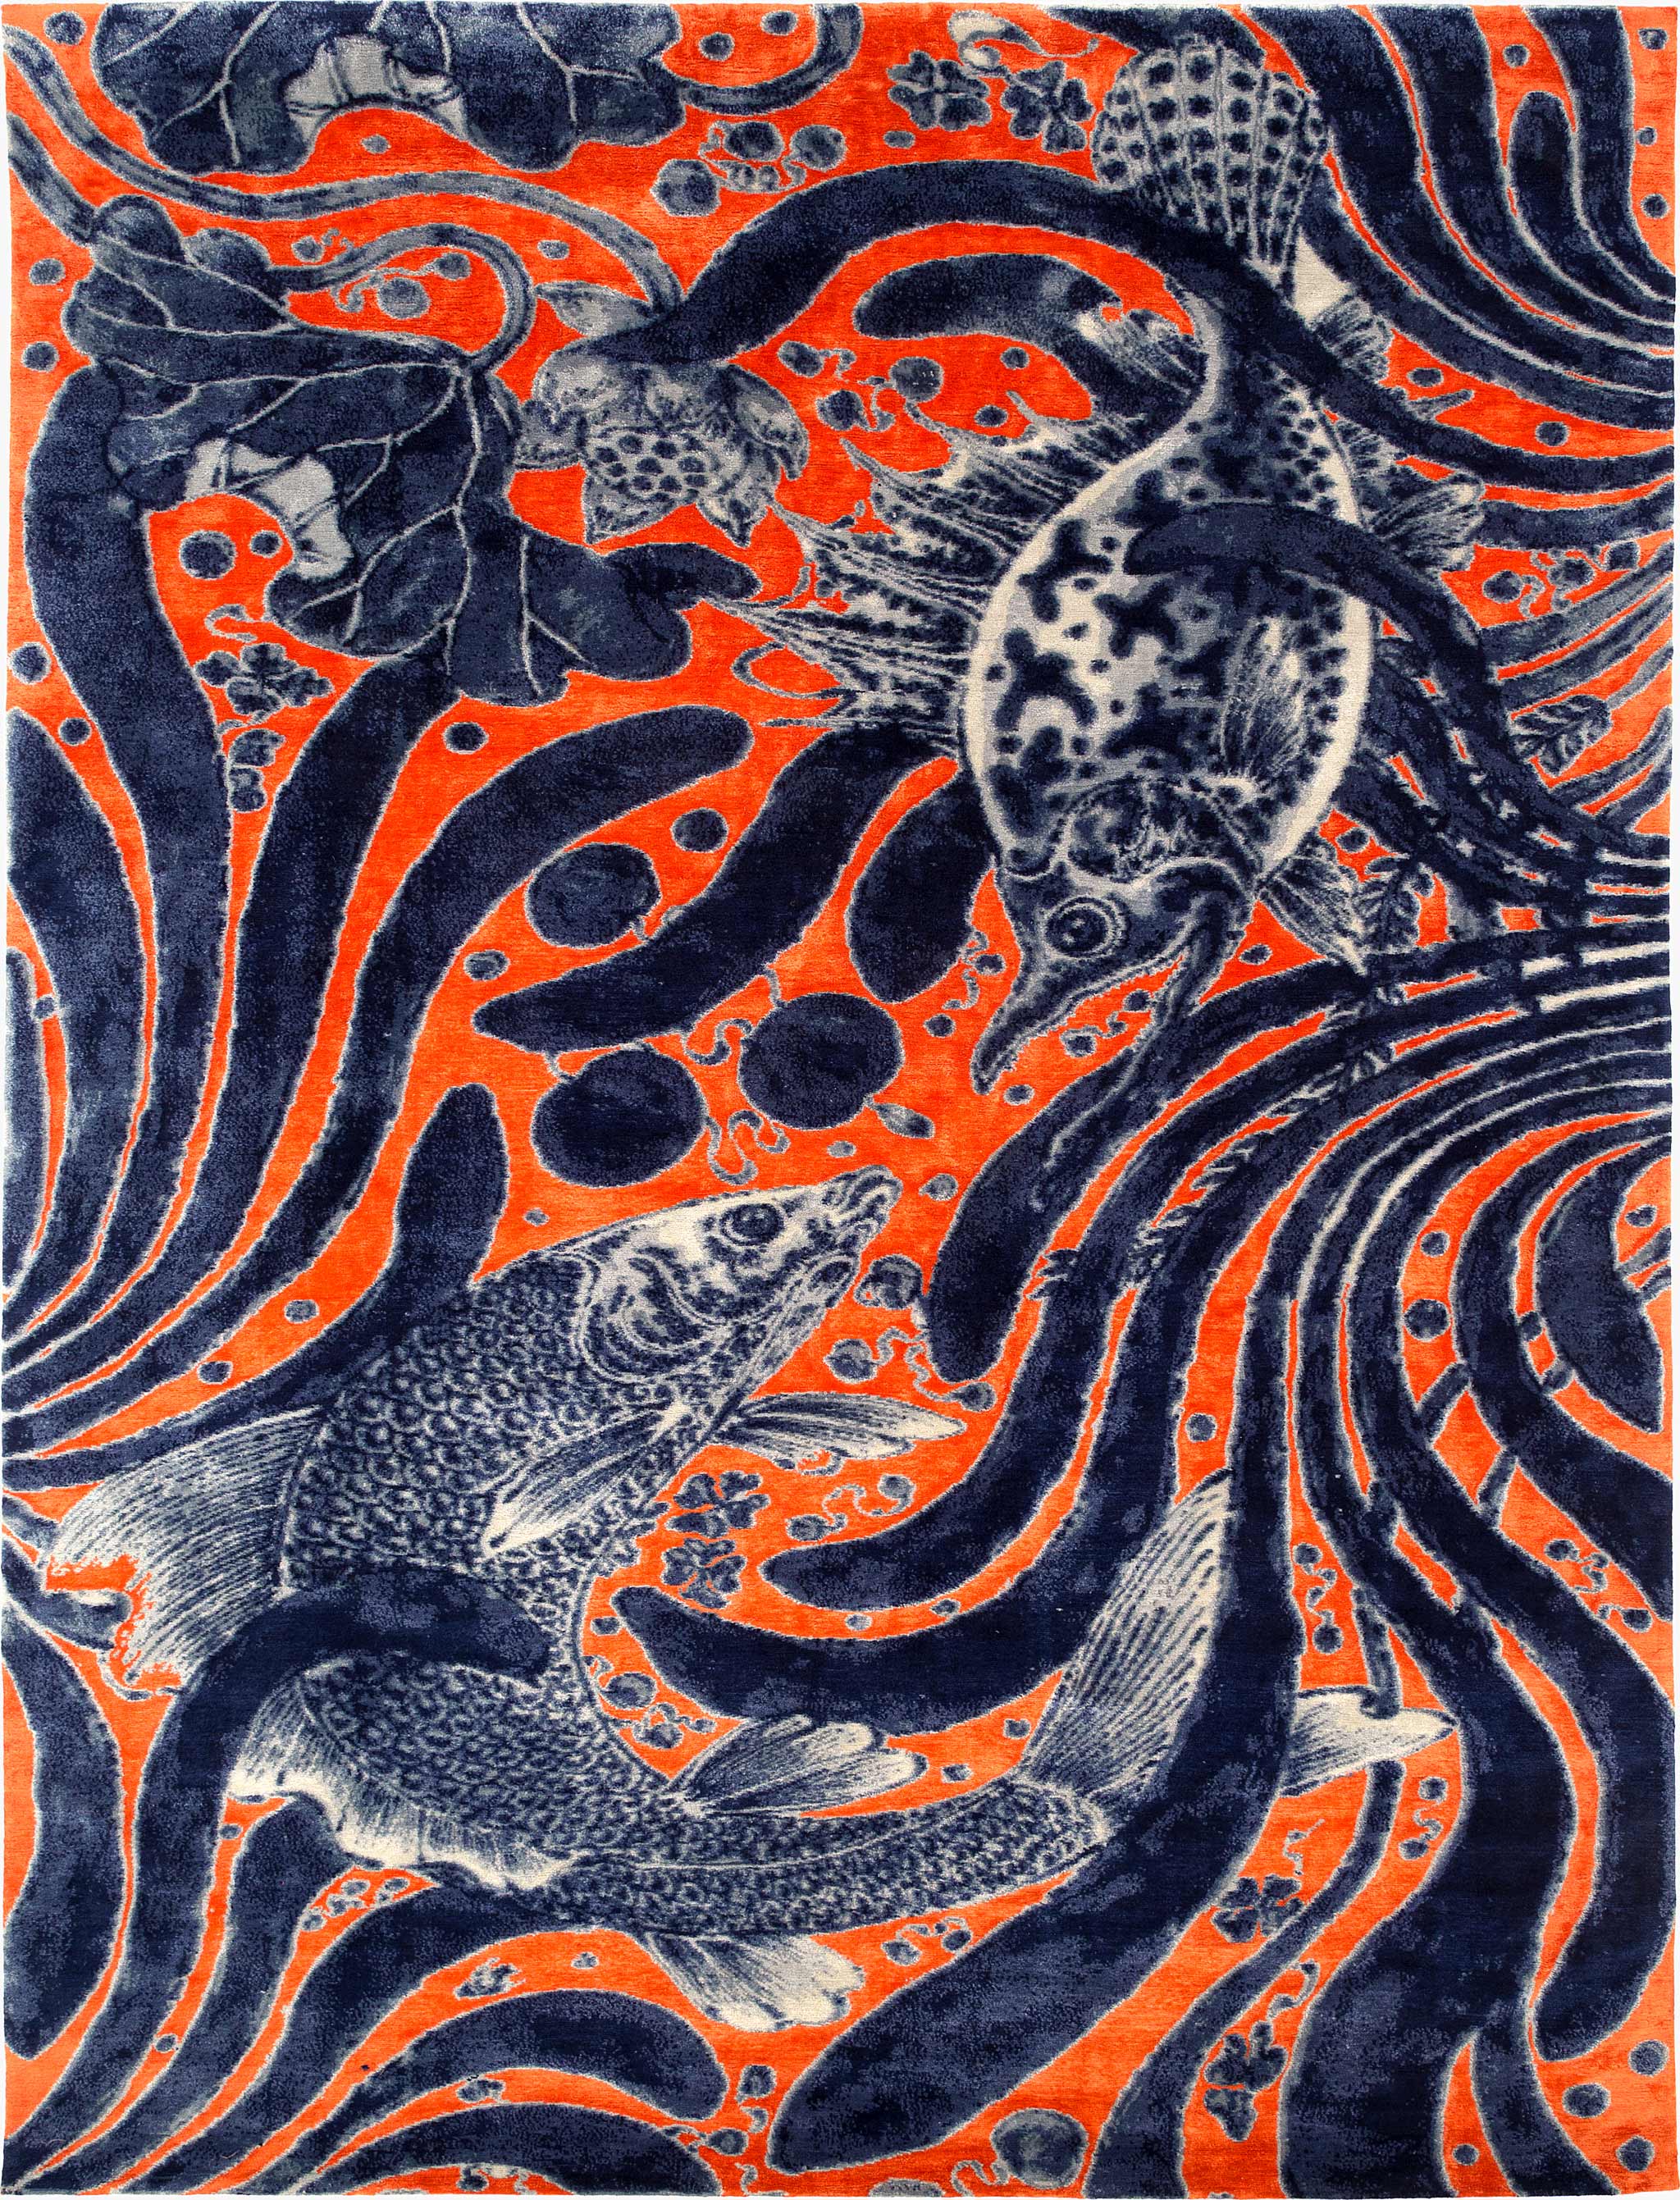 'Aquatic Life' carpet by Joseph Carini Carpets inspired by the work of Yuki Hayama. | Image courtesy of Joseph Carini Carpets.